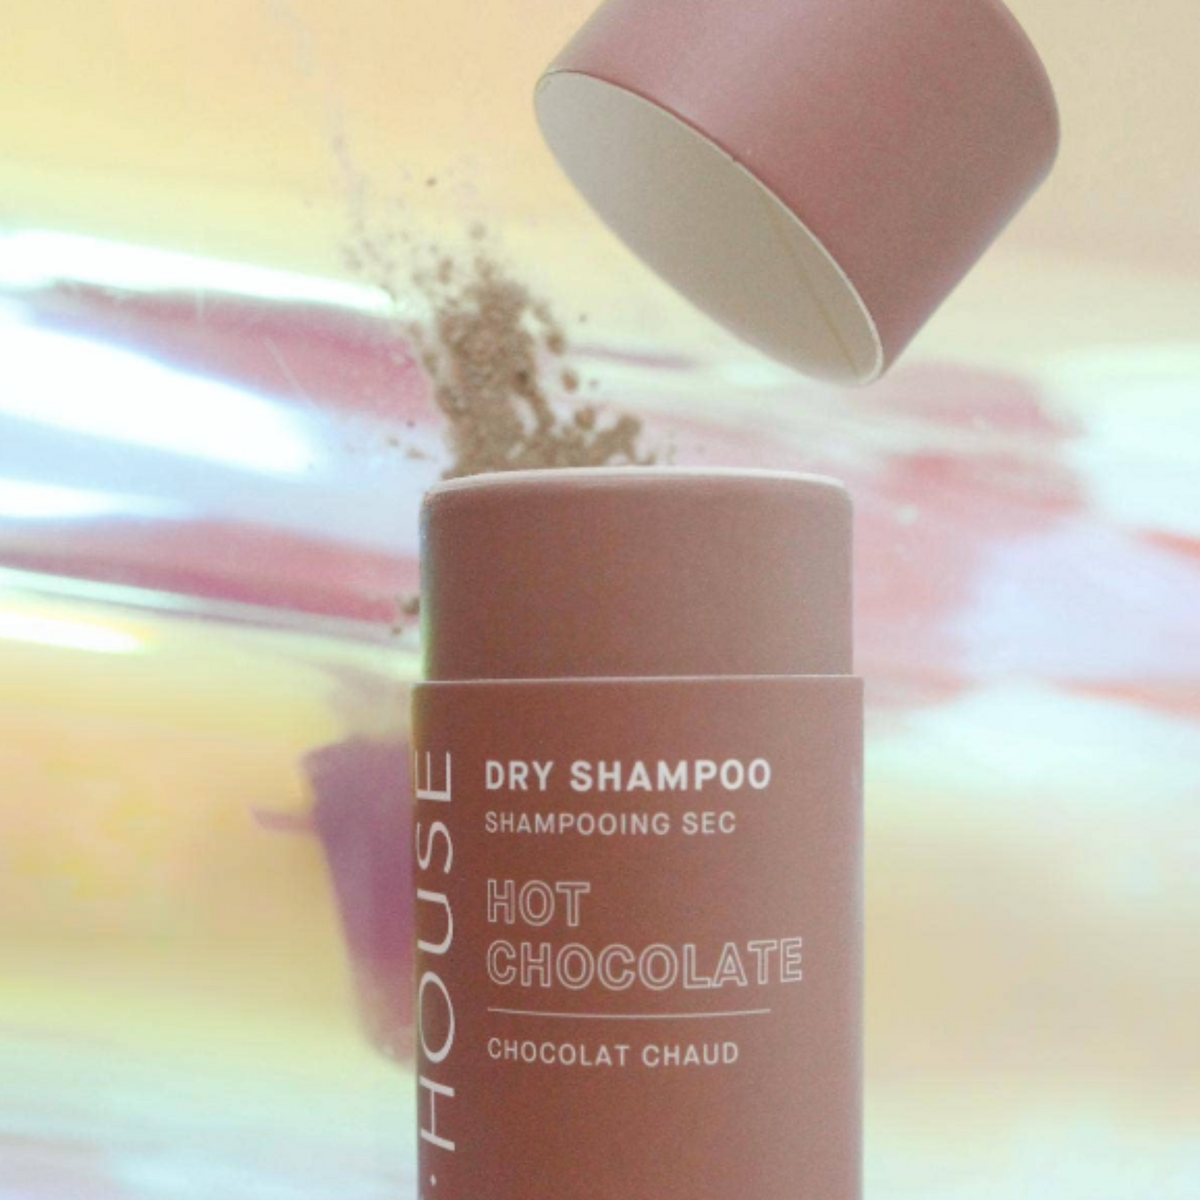 Dry Shampoo - HOT CHOCOLATE